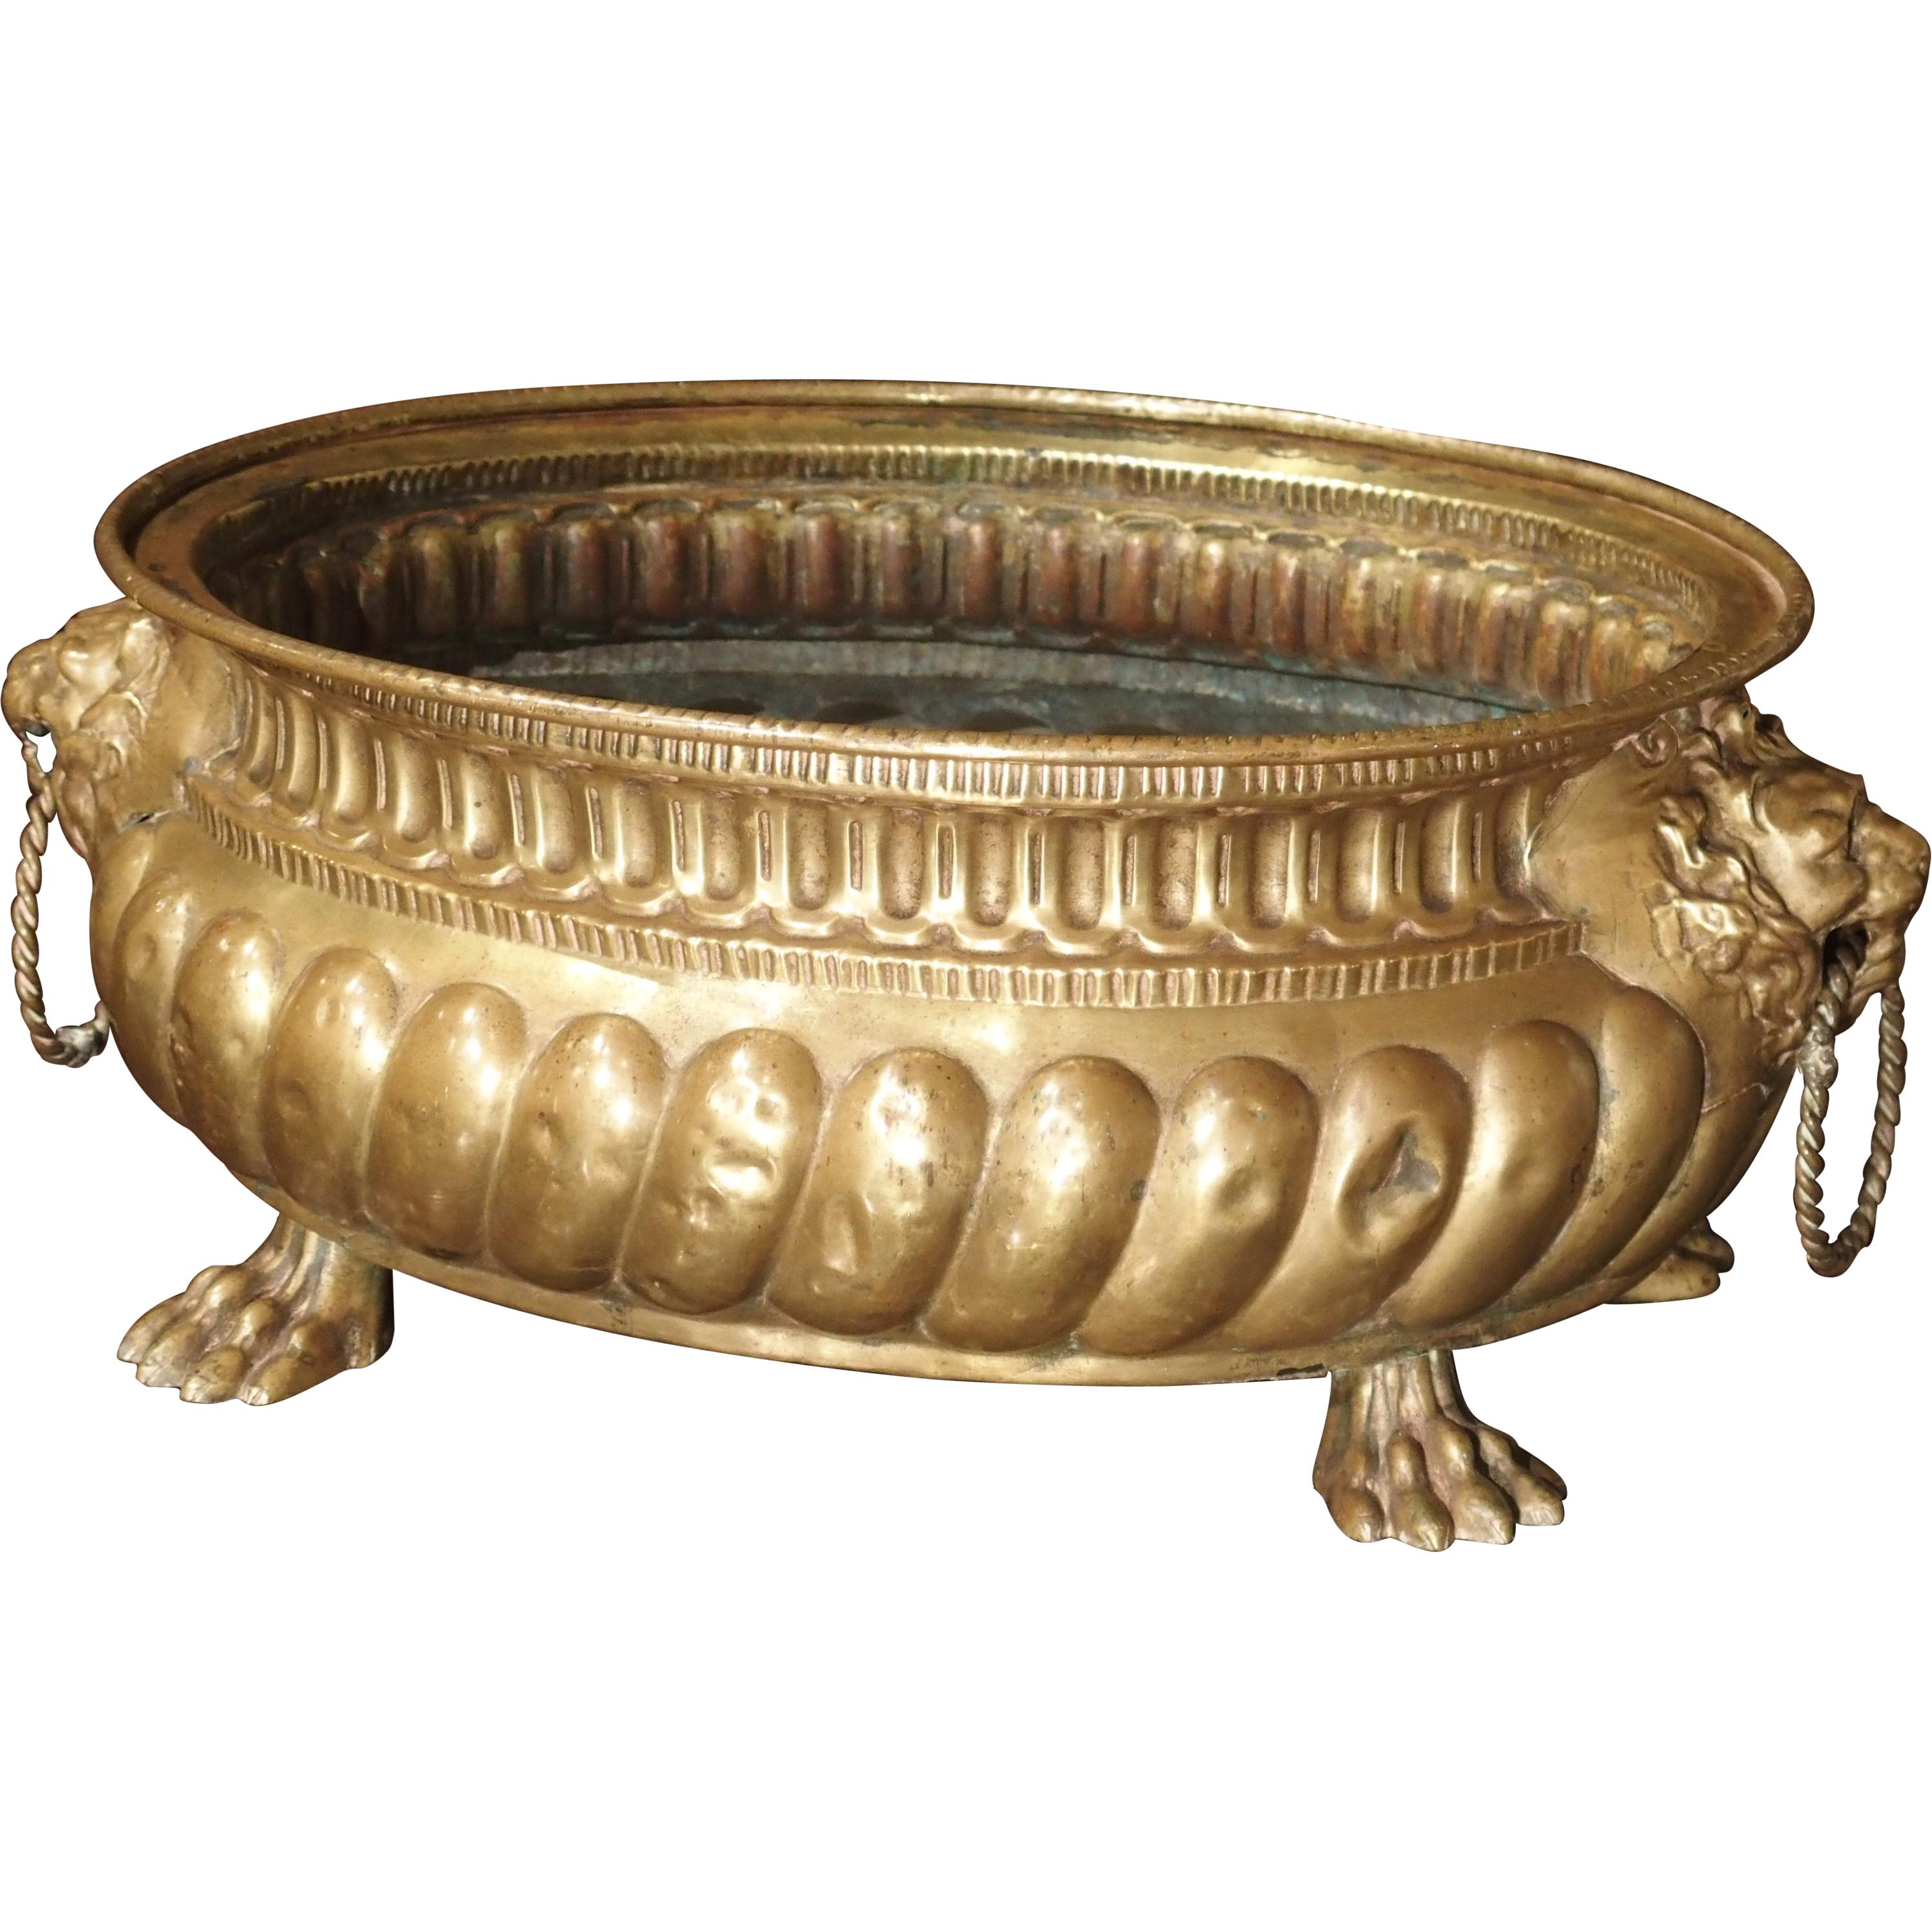 Antique Brass Repousse Jardinière from France, circa 1860